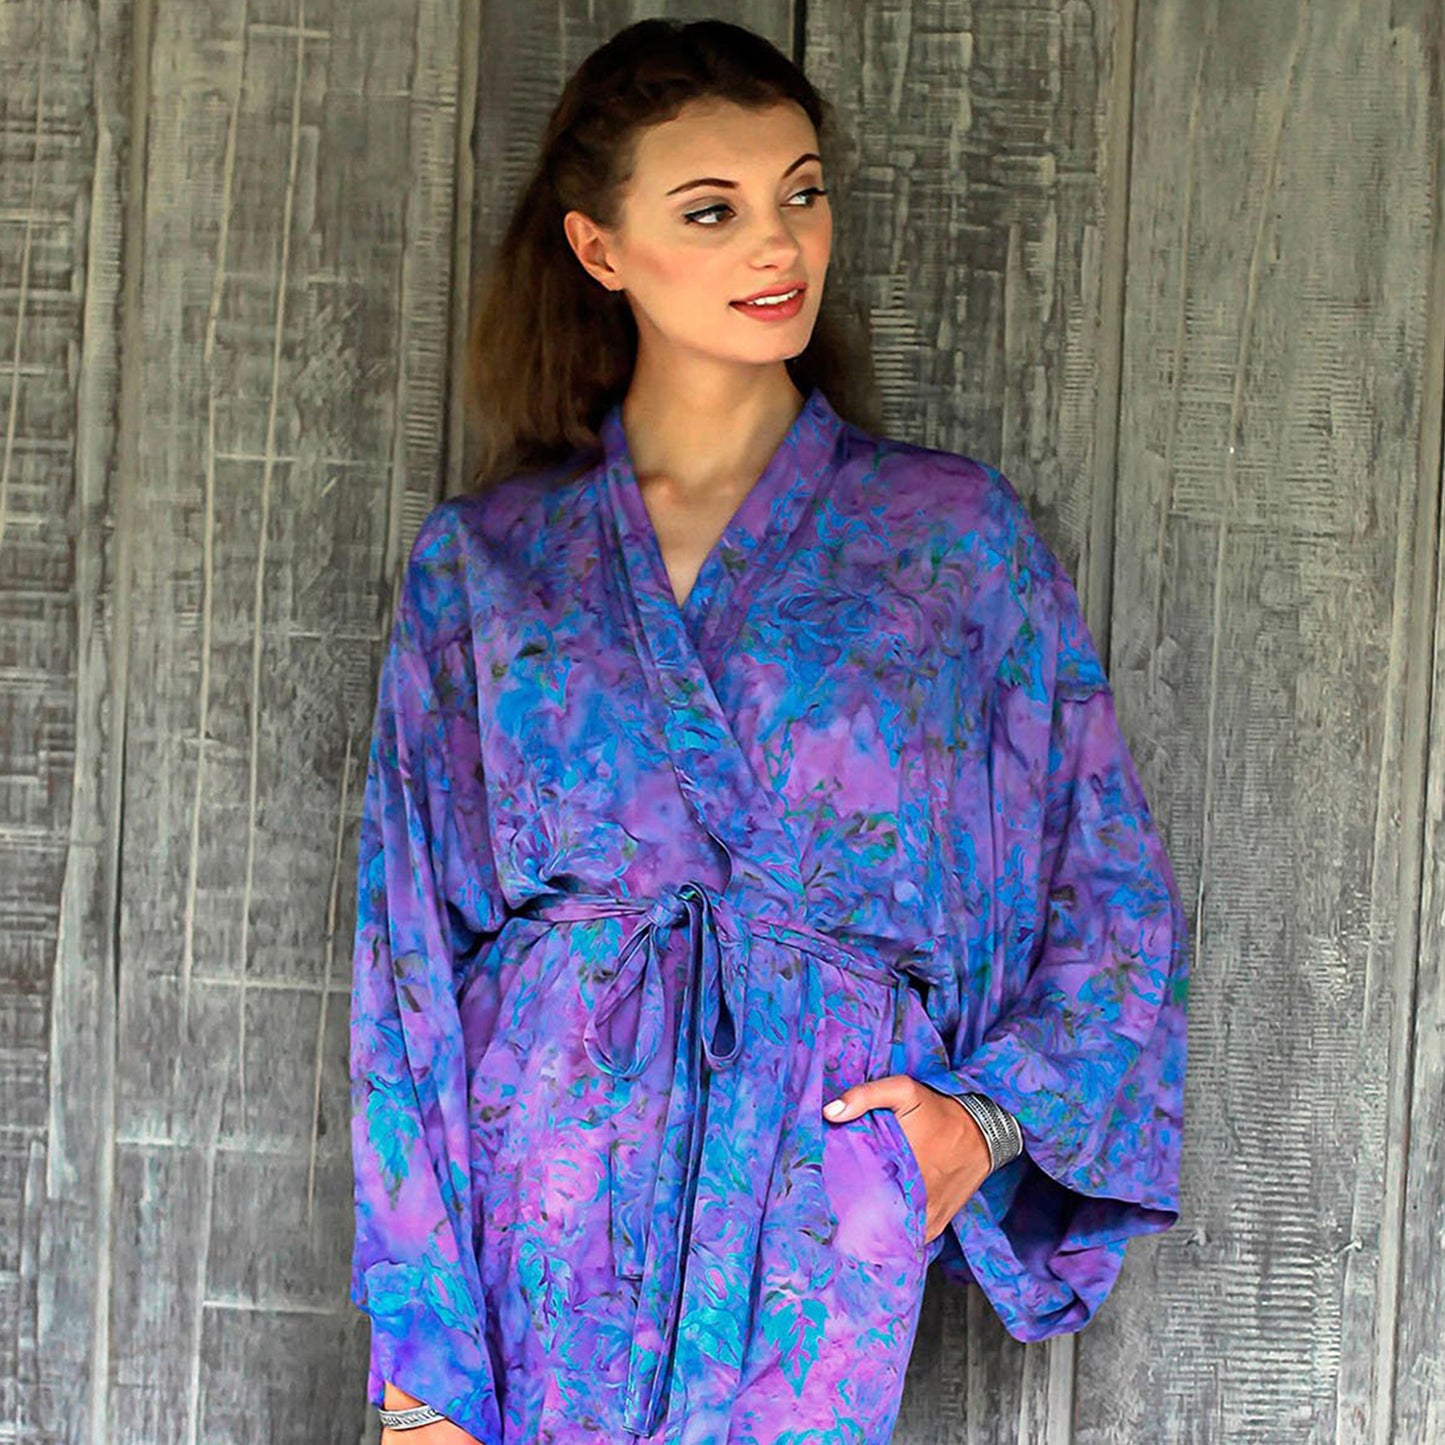 Purple Mist Batik Robe